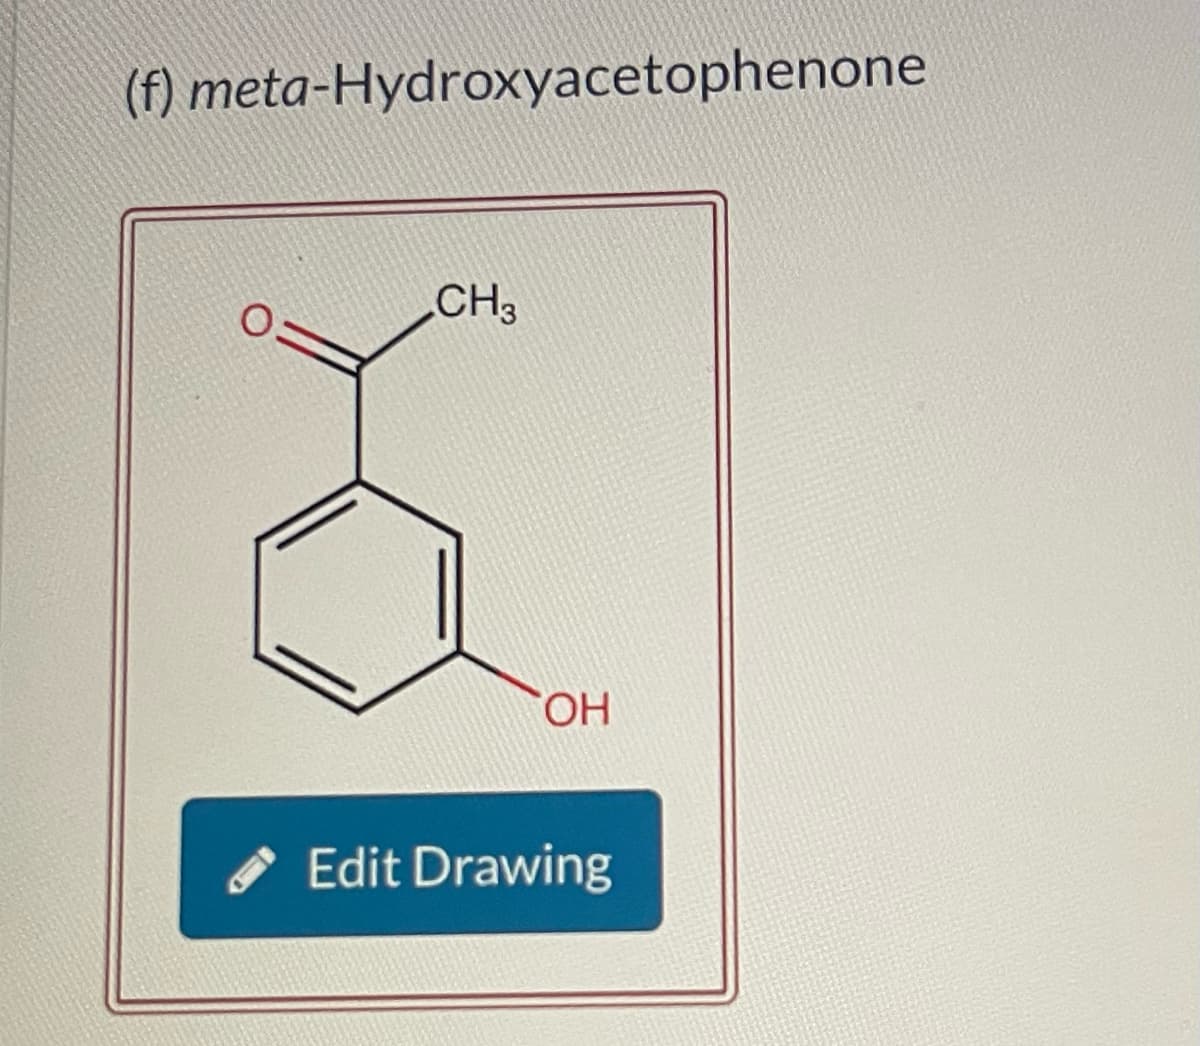 (f) meta-Hydroxyacetophenone
O
CH3
OH
Edit Drawing